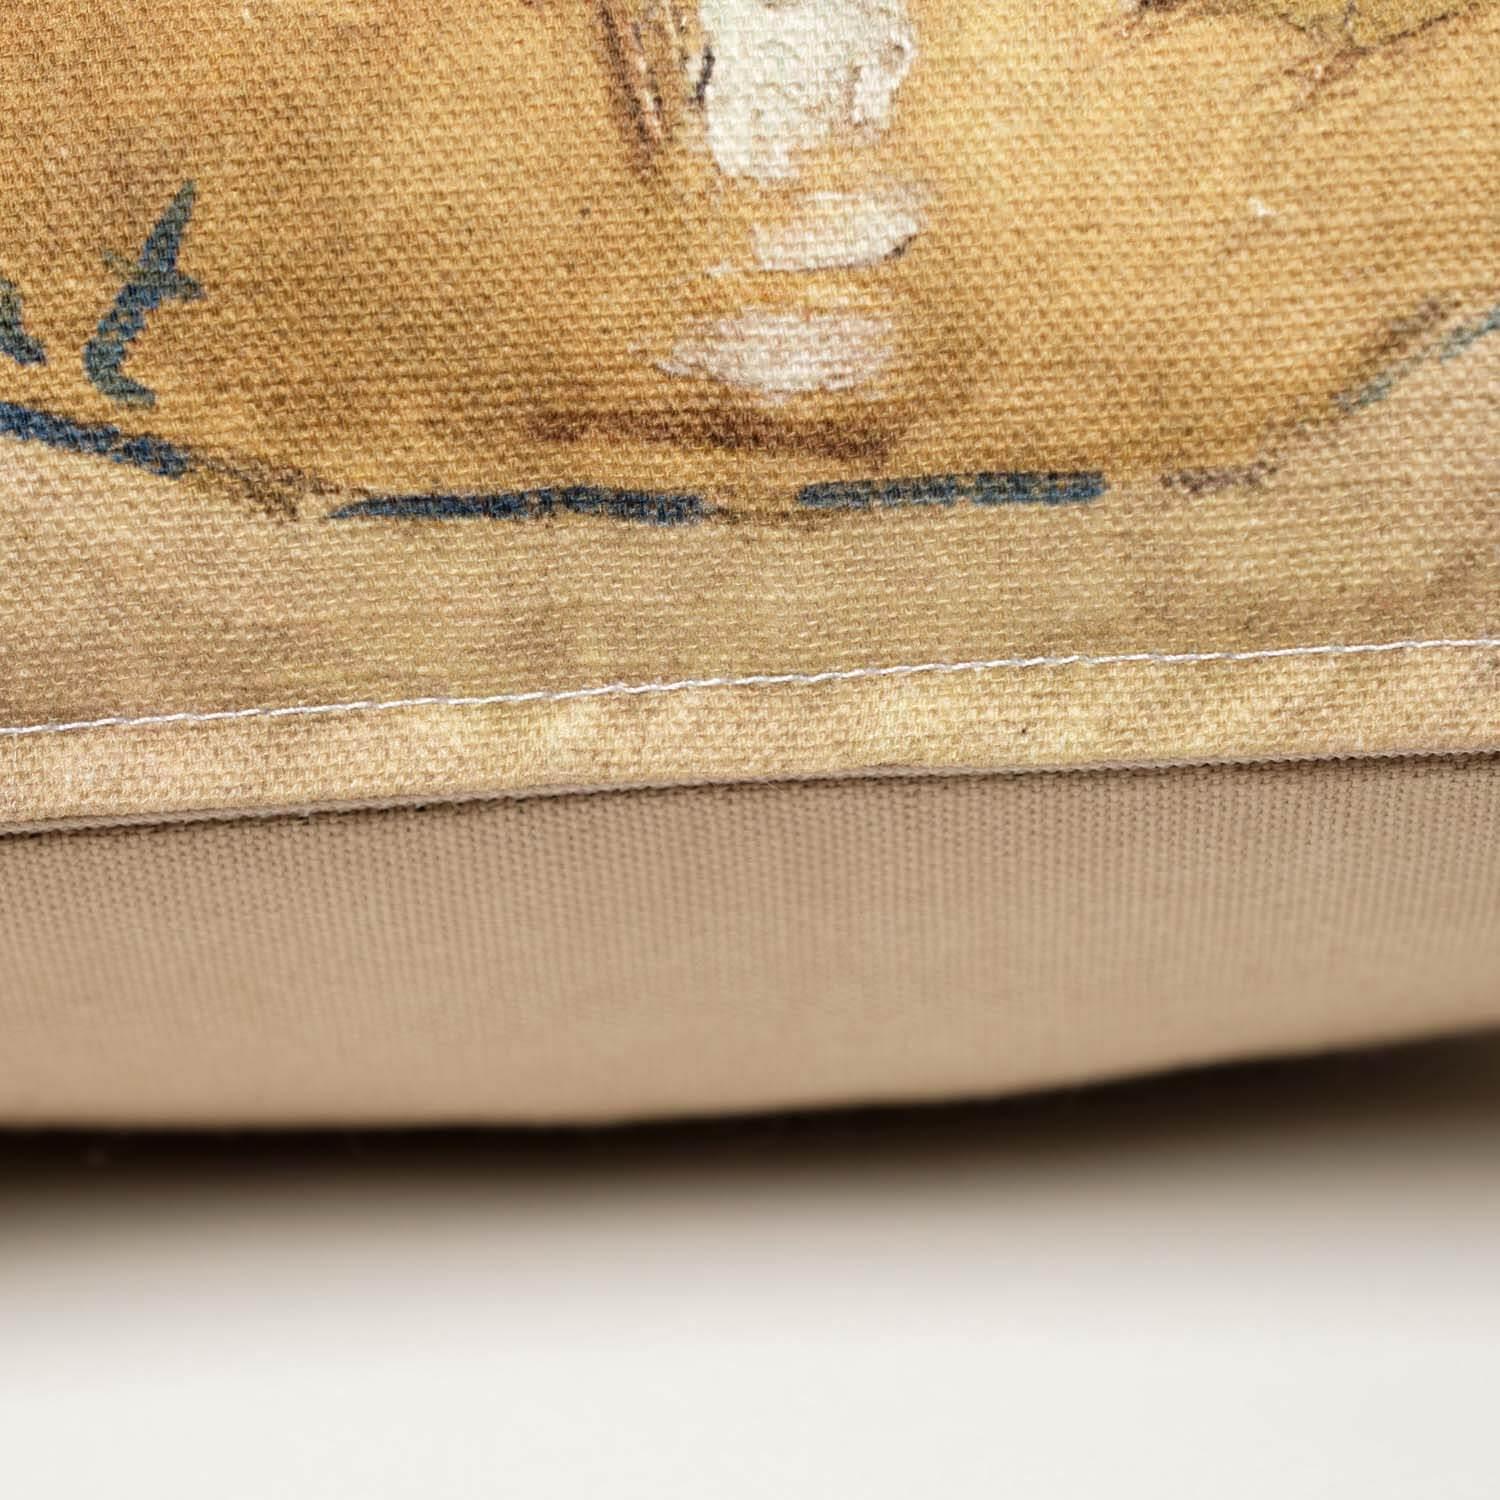 Venus Sandro Botticelli’s - National Gallery Cushion - Handmade Cushions UK - WeLoveCushions